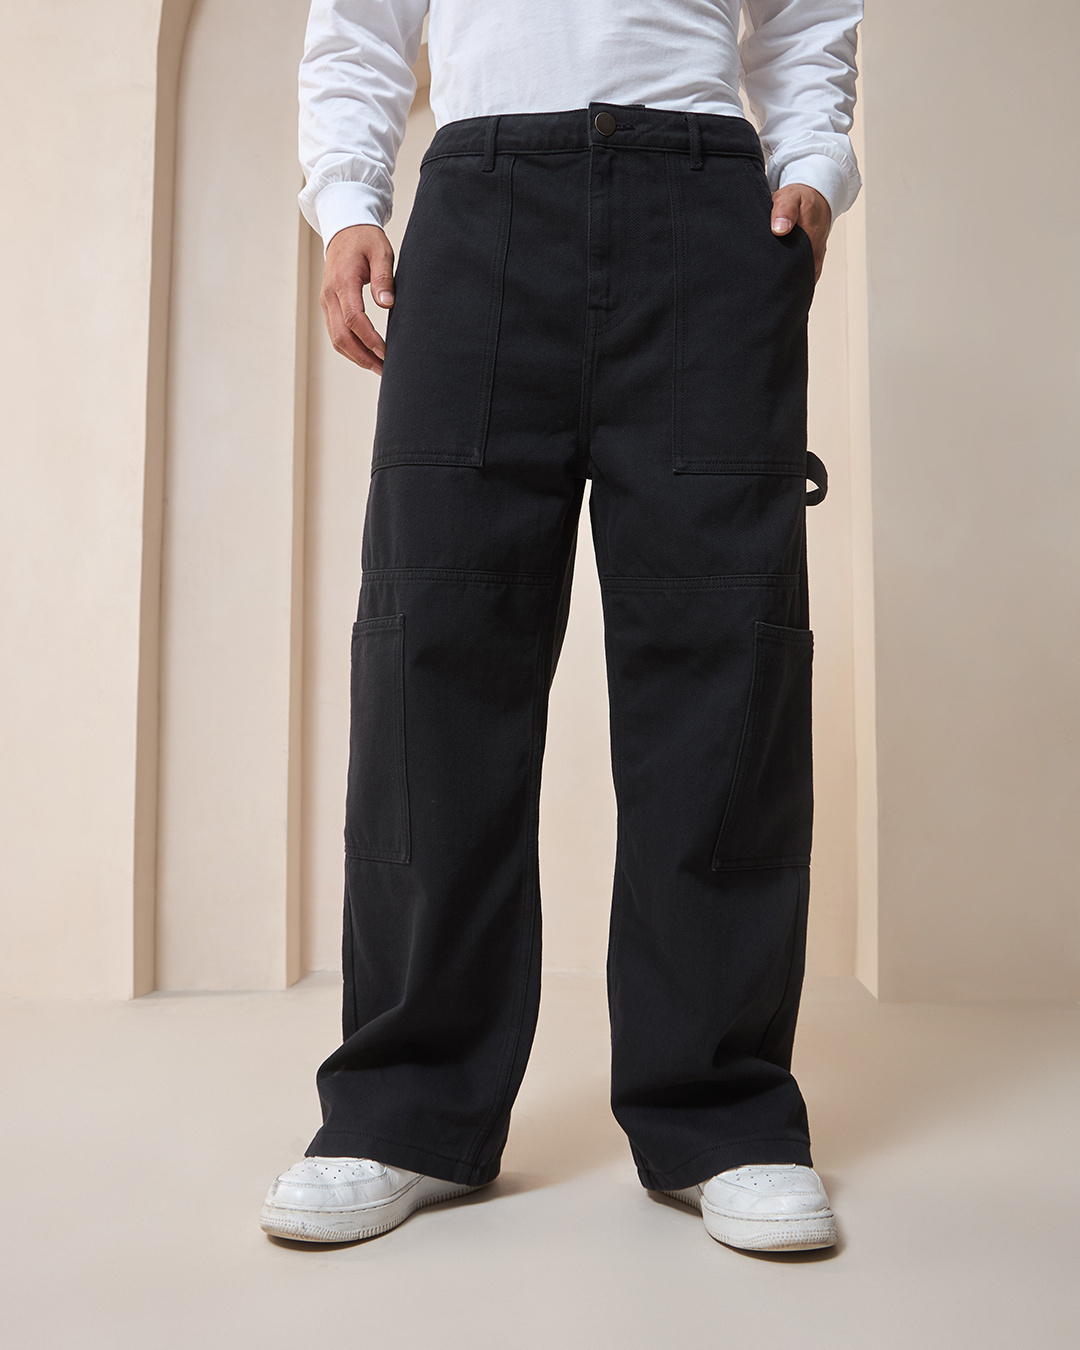 Buy Men's Black Baggy Straight Fit Carpenter Jeans Online at Bewakoof